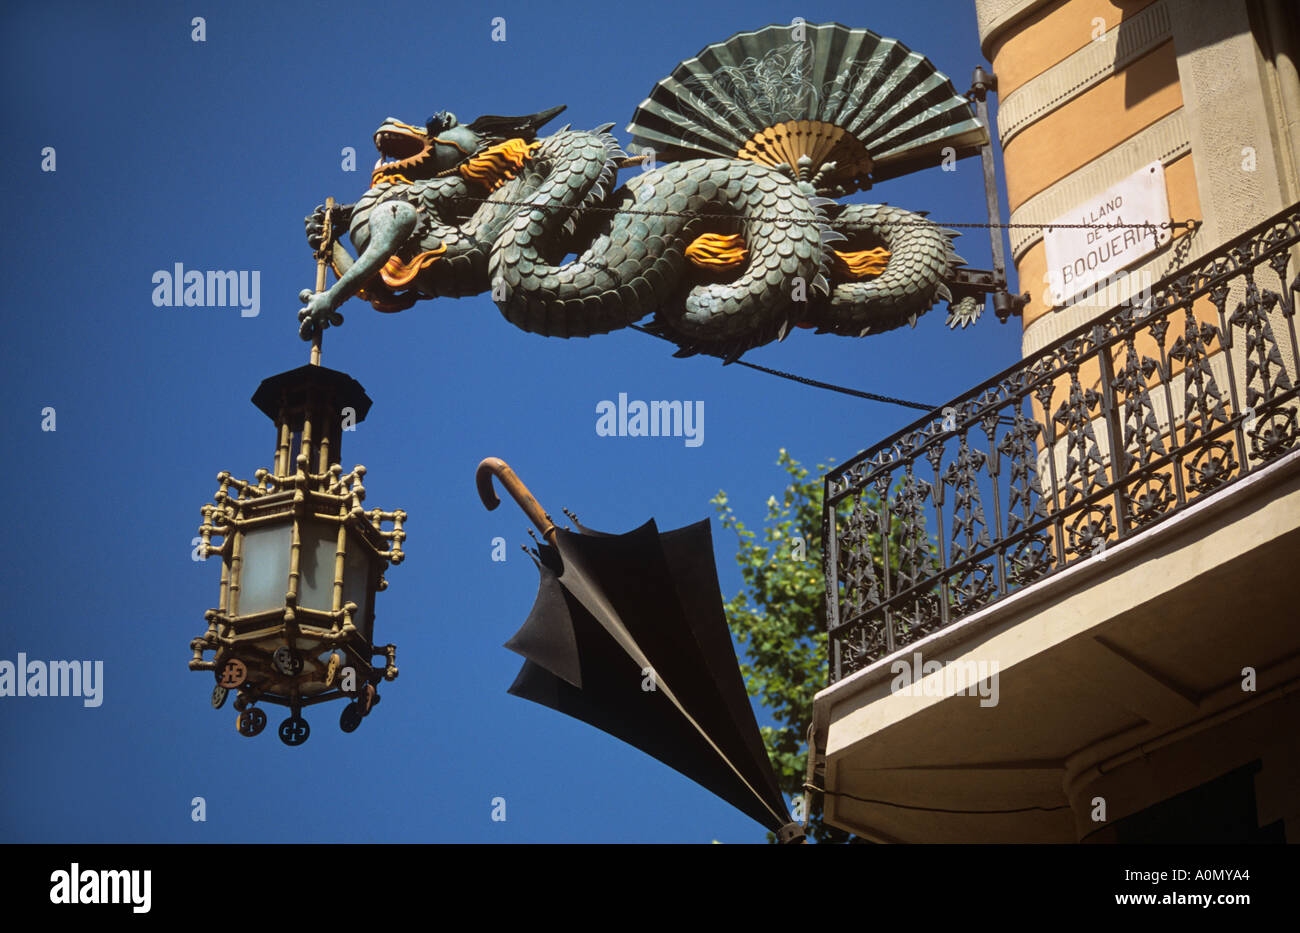 Dragon sign Casa Quadros Las Ramblas Barcelona Spain Stock Photo